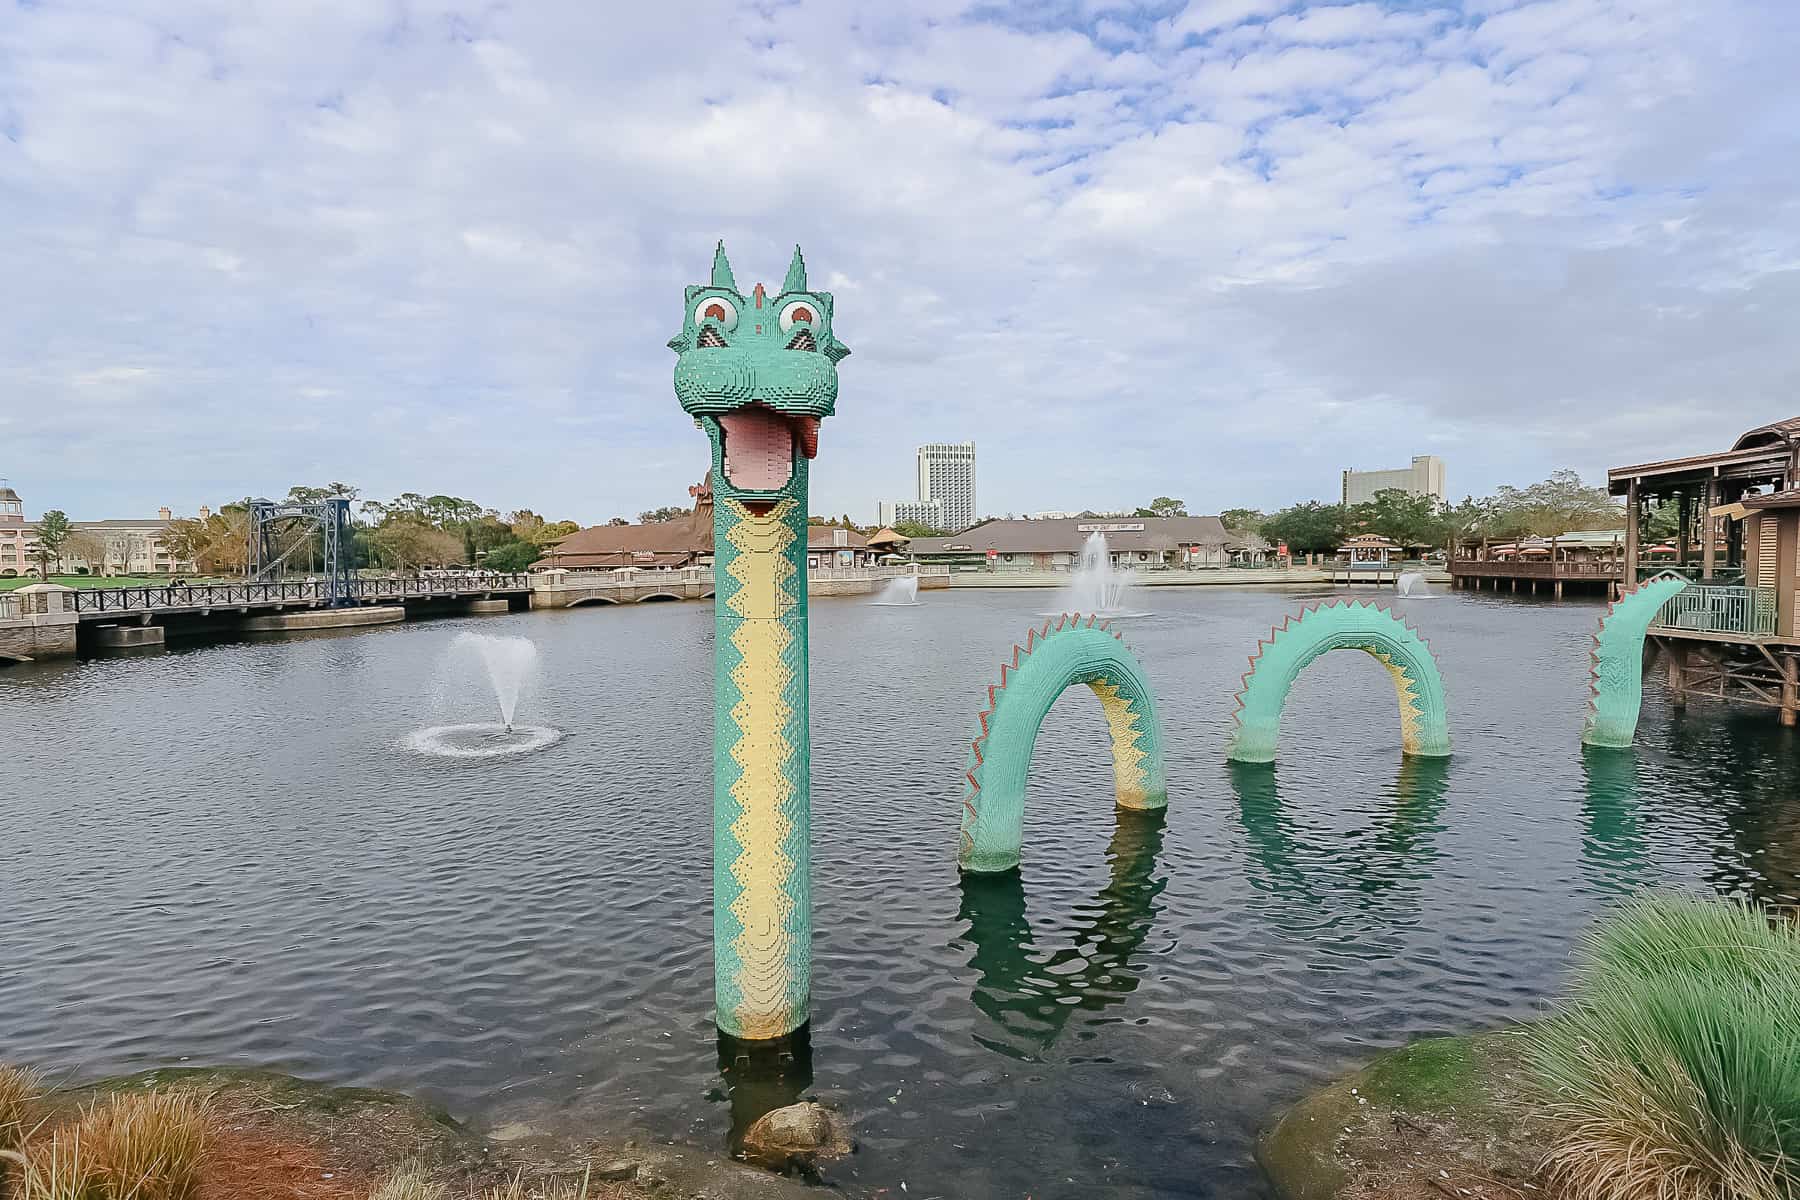 Brickly the Lego sea serpent at Disney Springs